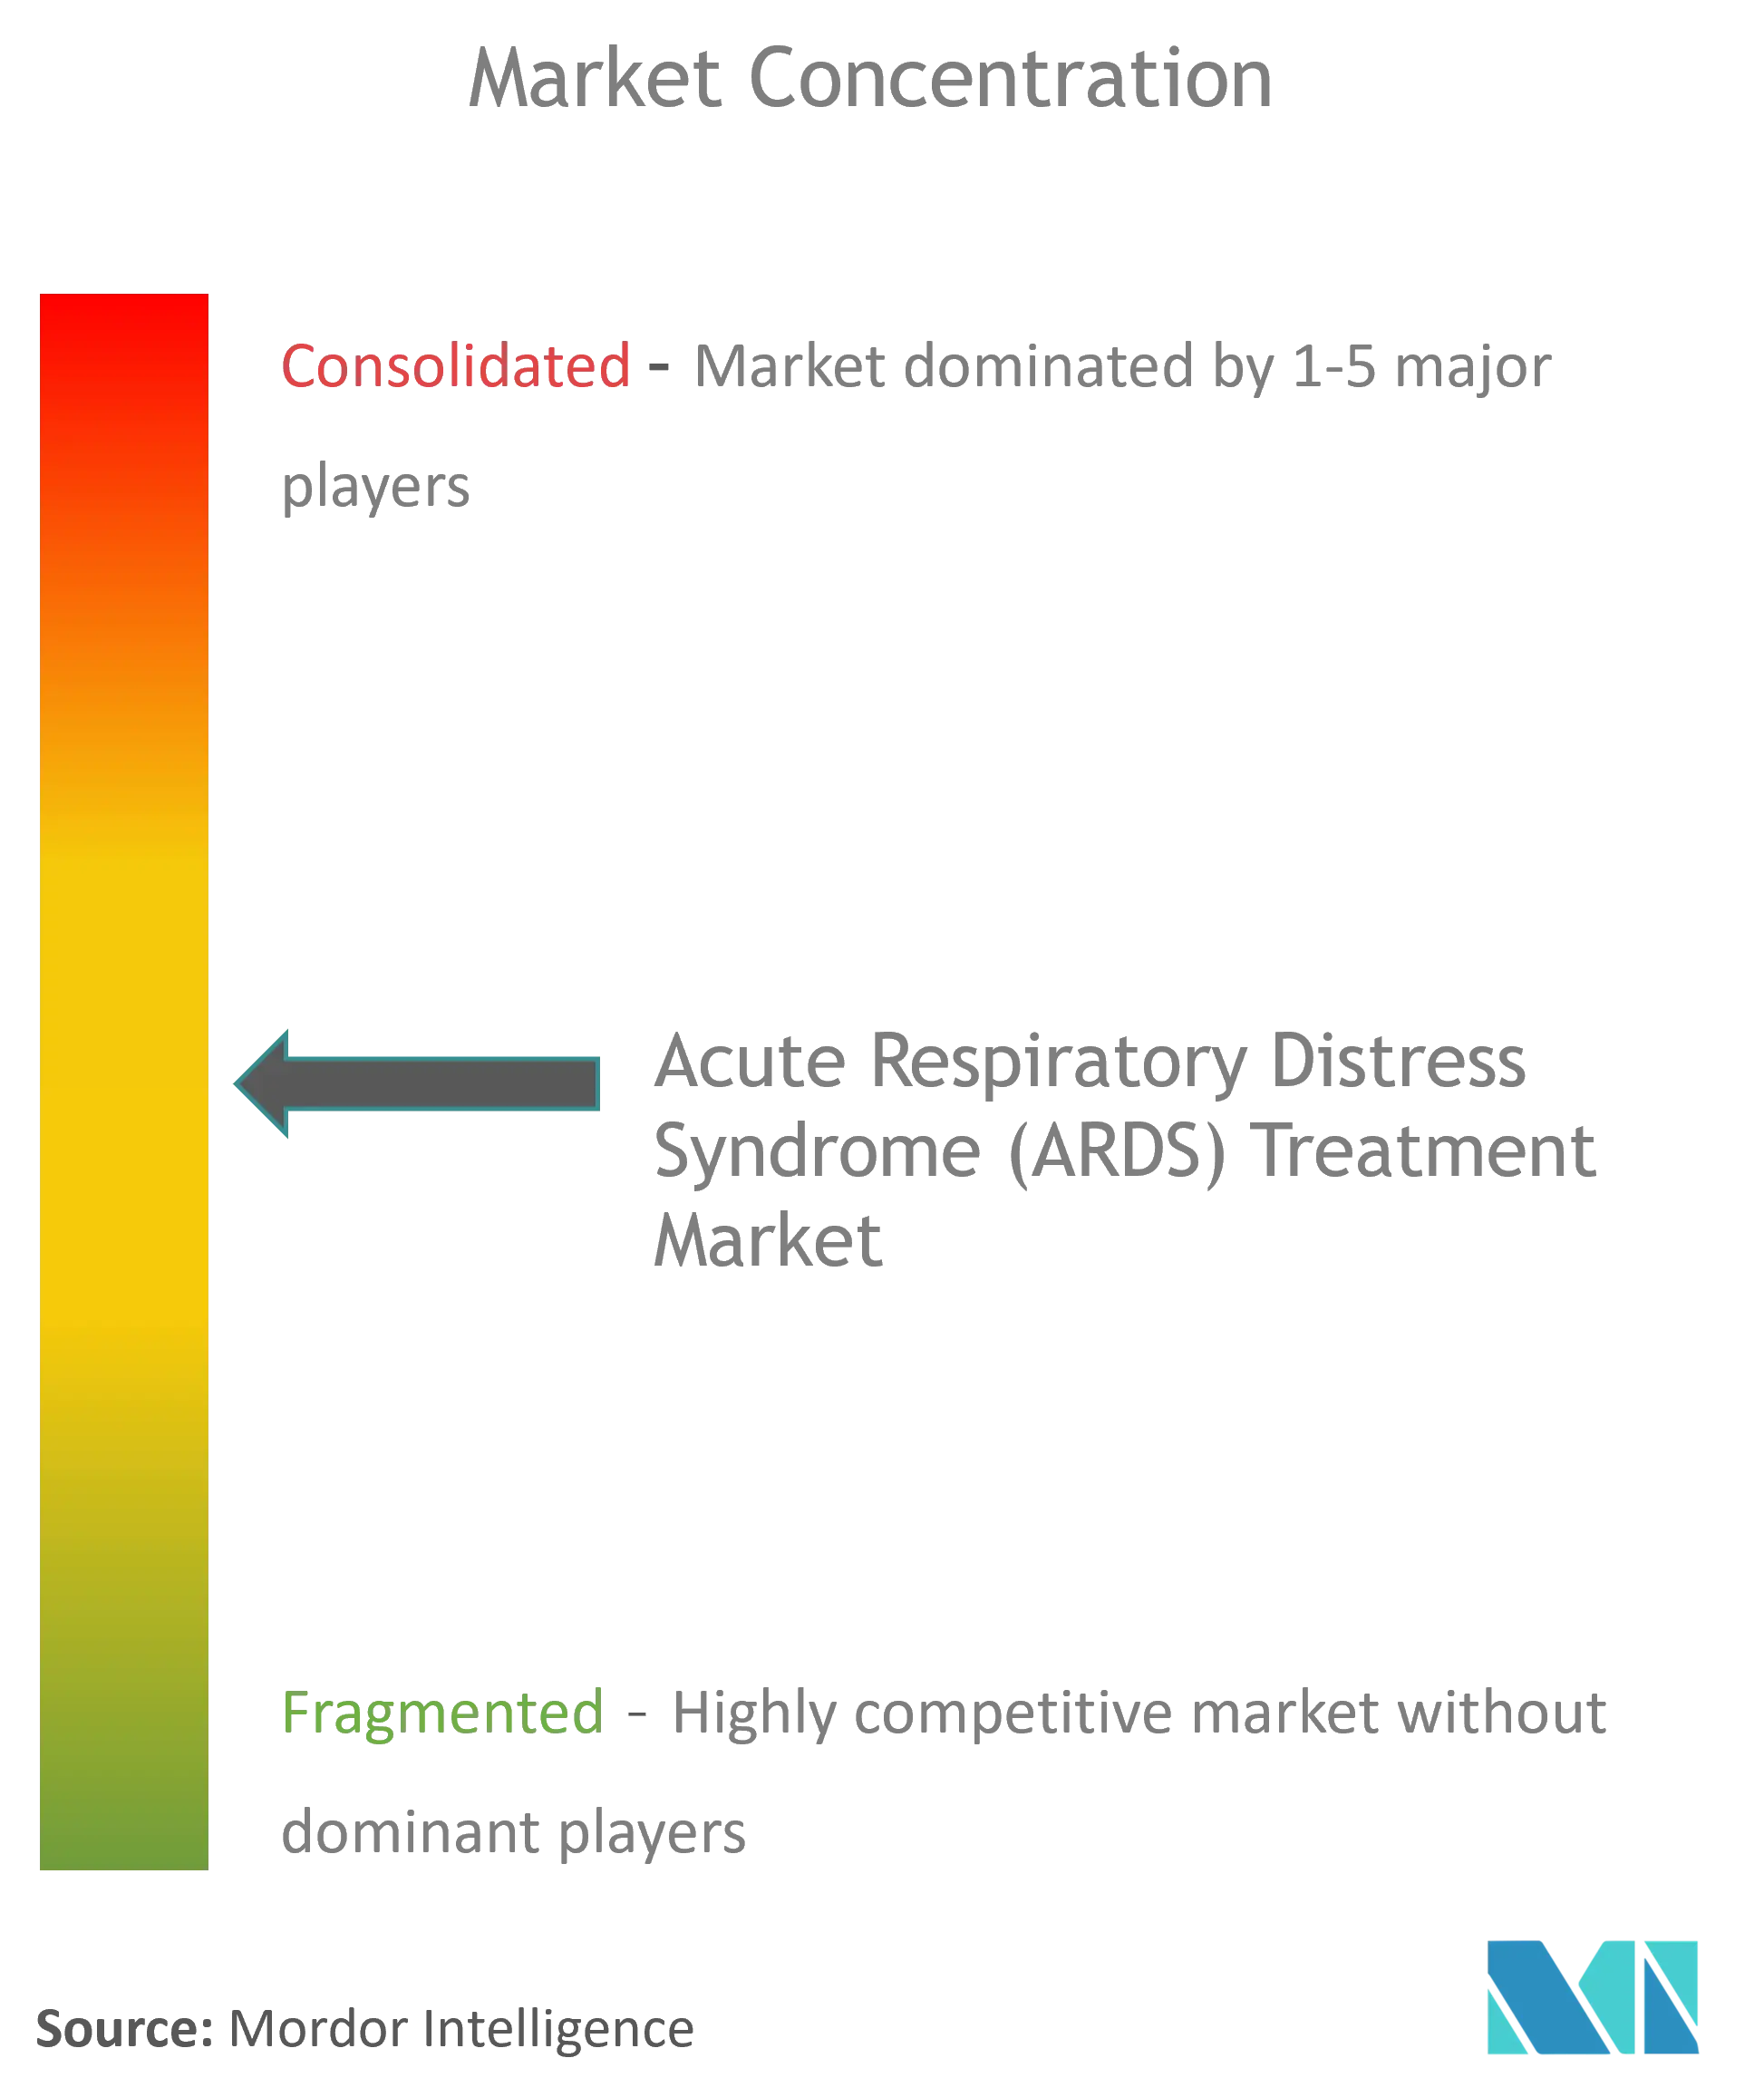 ARDS Treatment Market Concentration